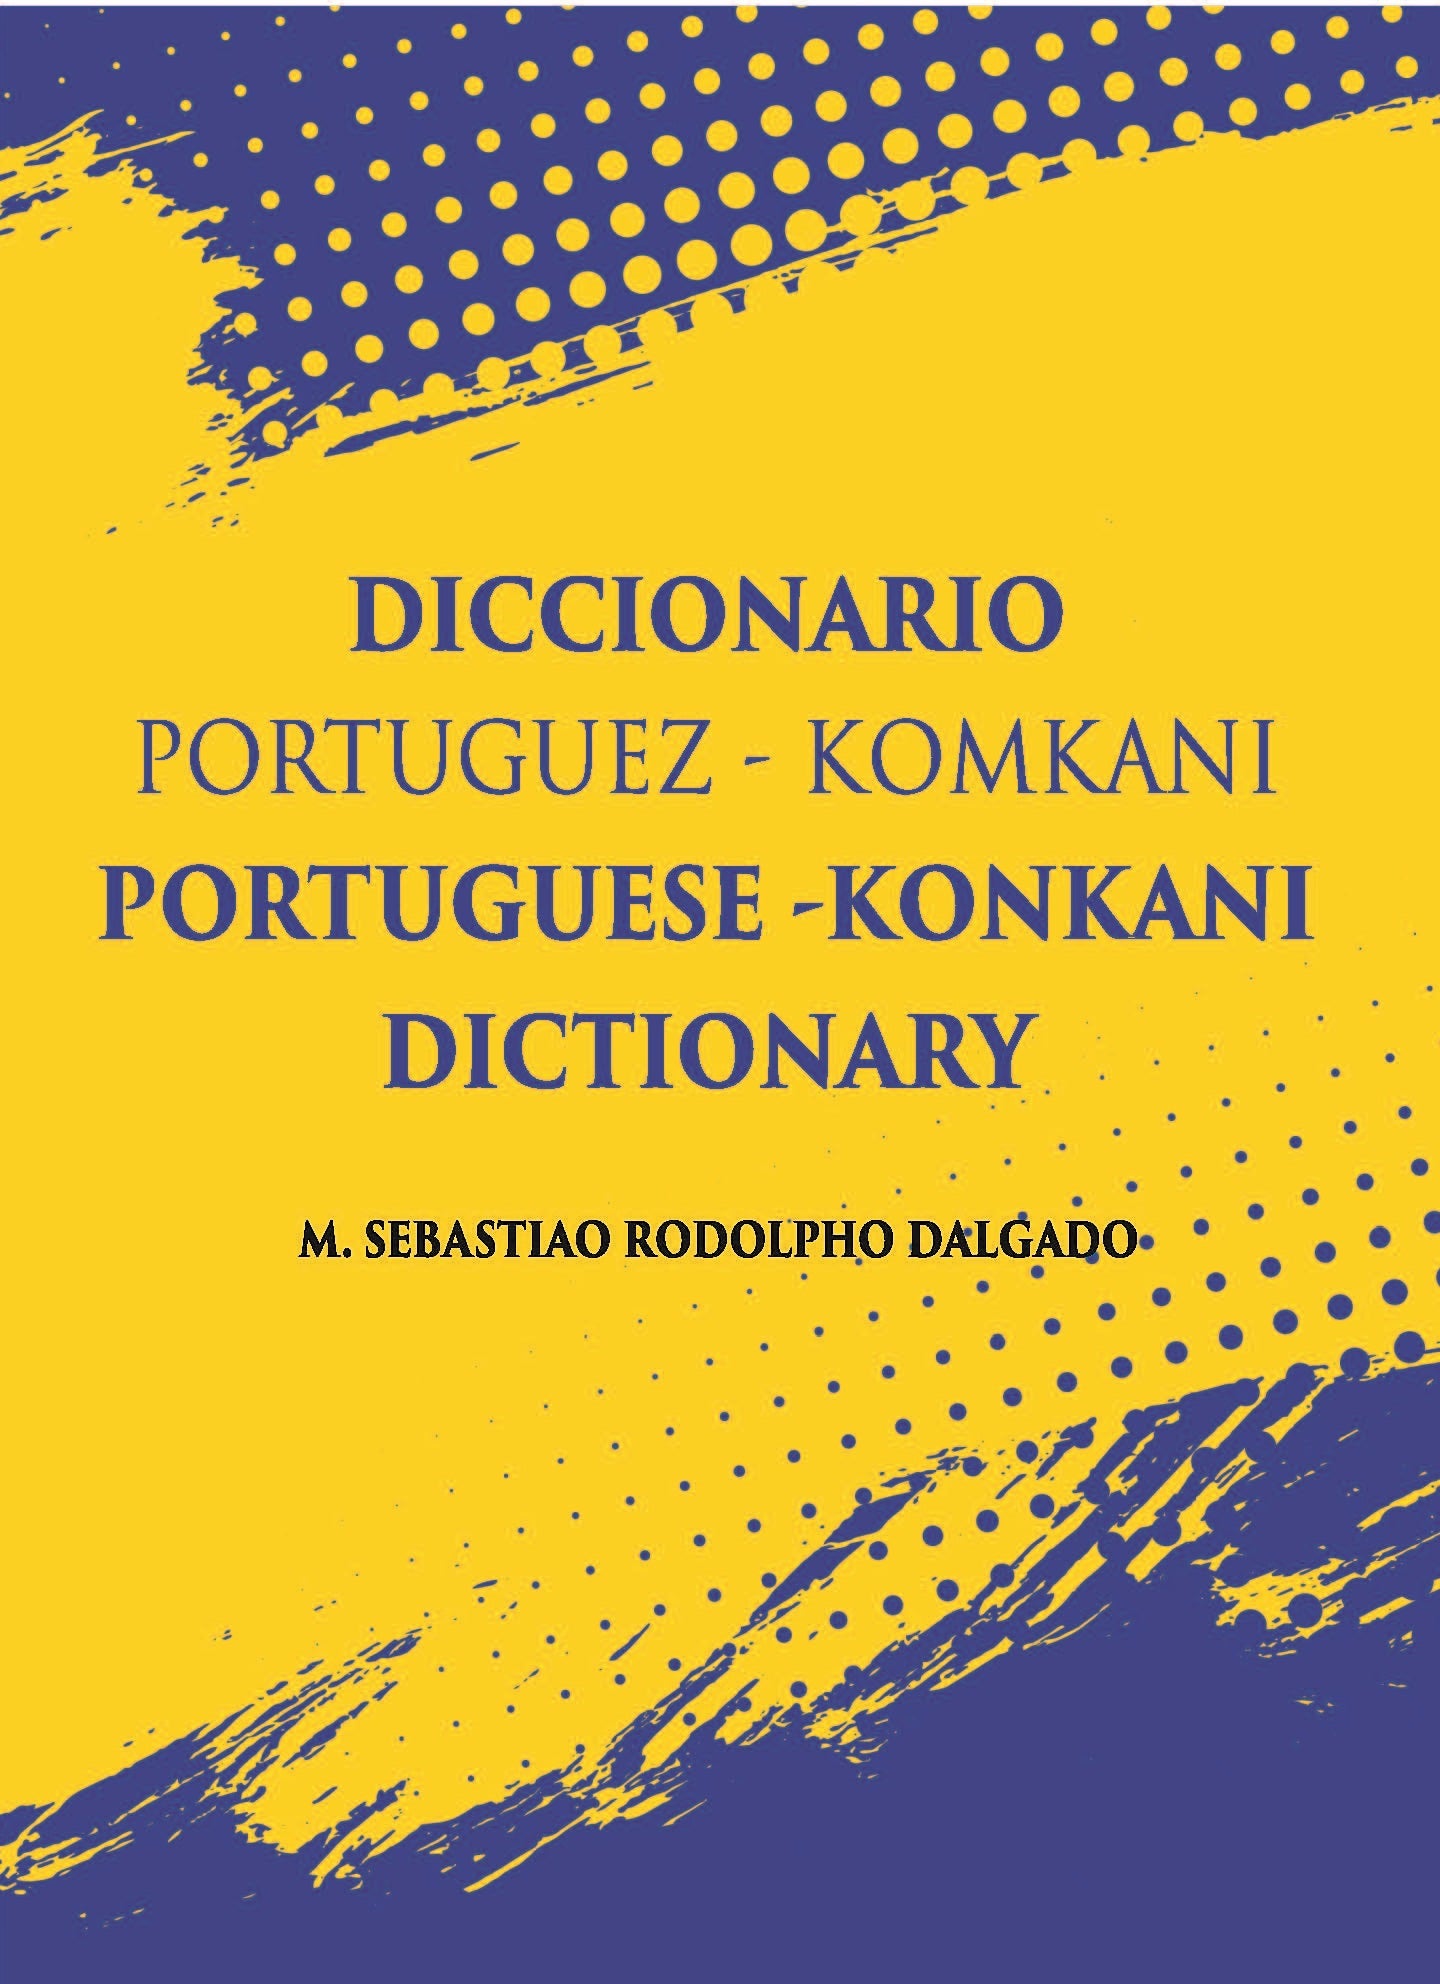 Diccionario Portuguez - Komkani Portuguese -Konkani Dictionary